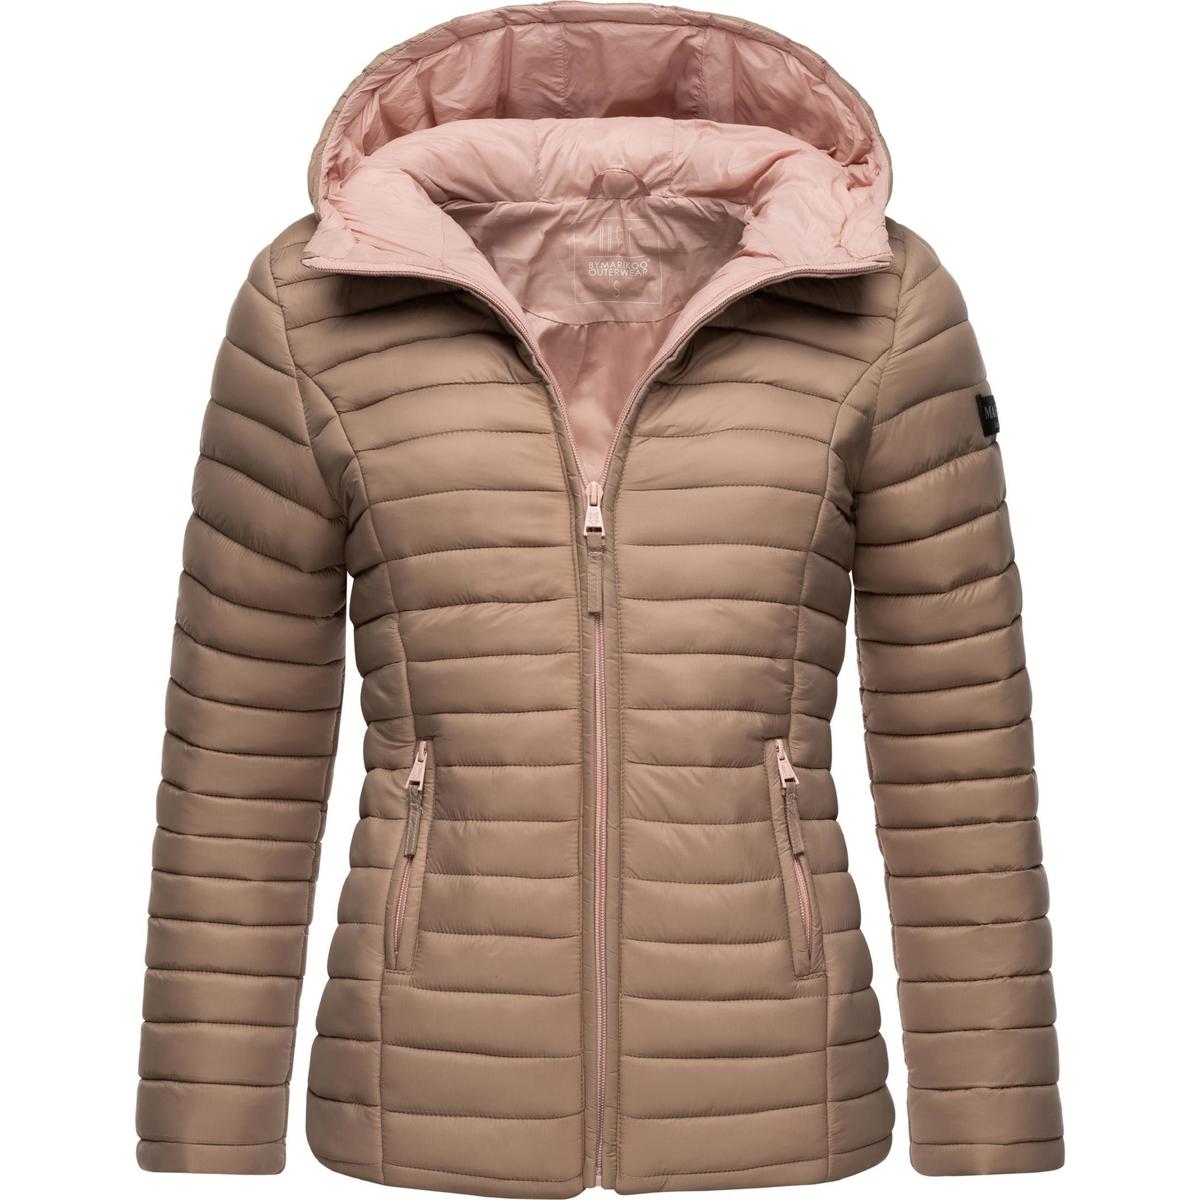 Extrem günstige Qualität Marikoo Übergangsjacke Asraa Braun Damen Jacken 79,95 € - Kleidung